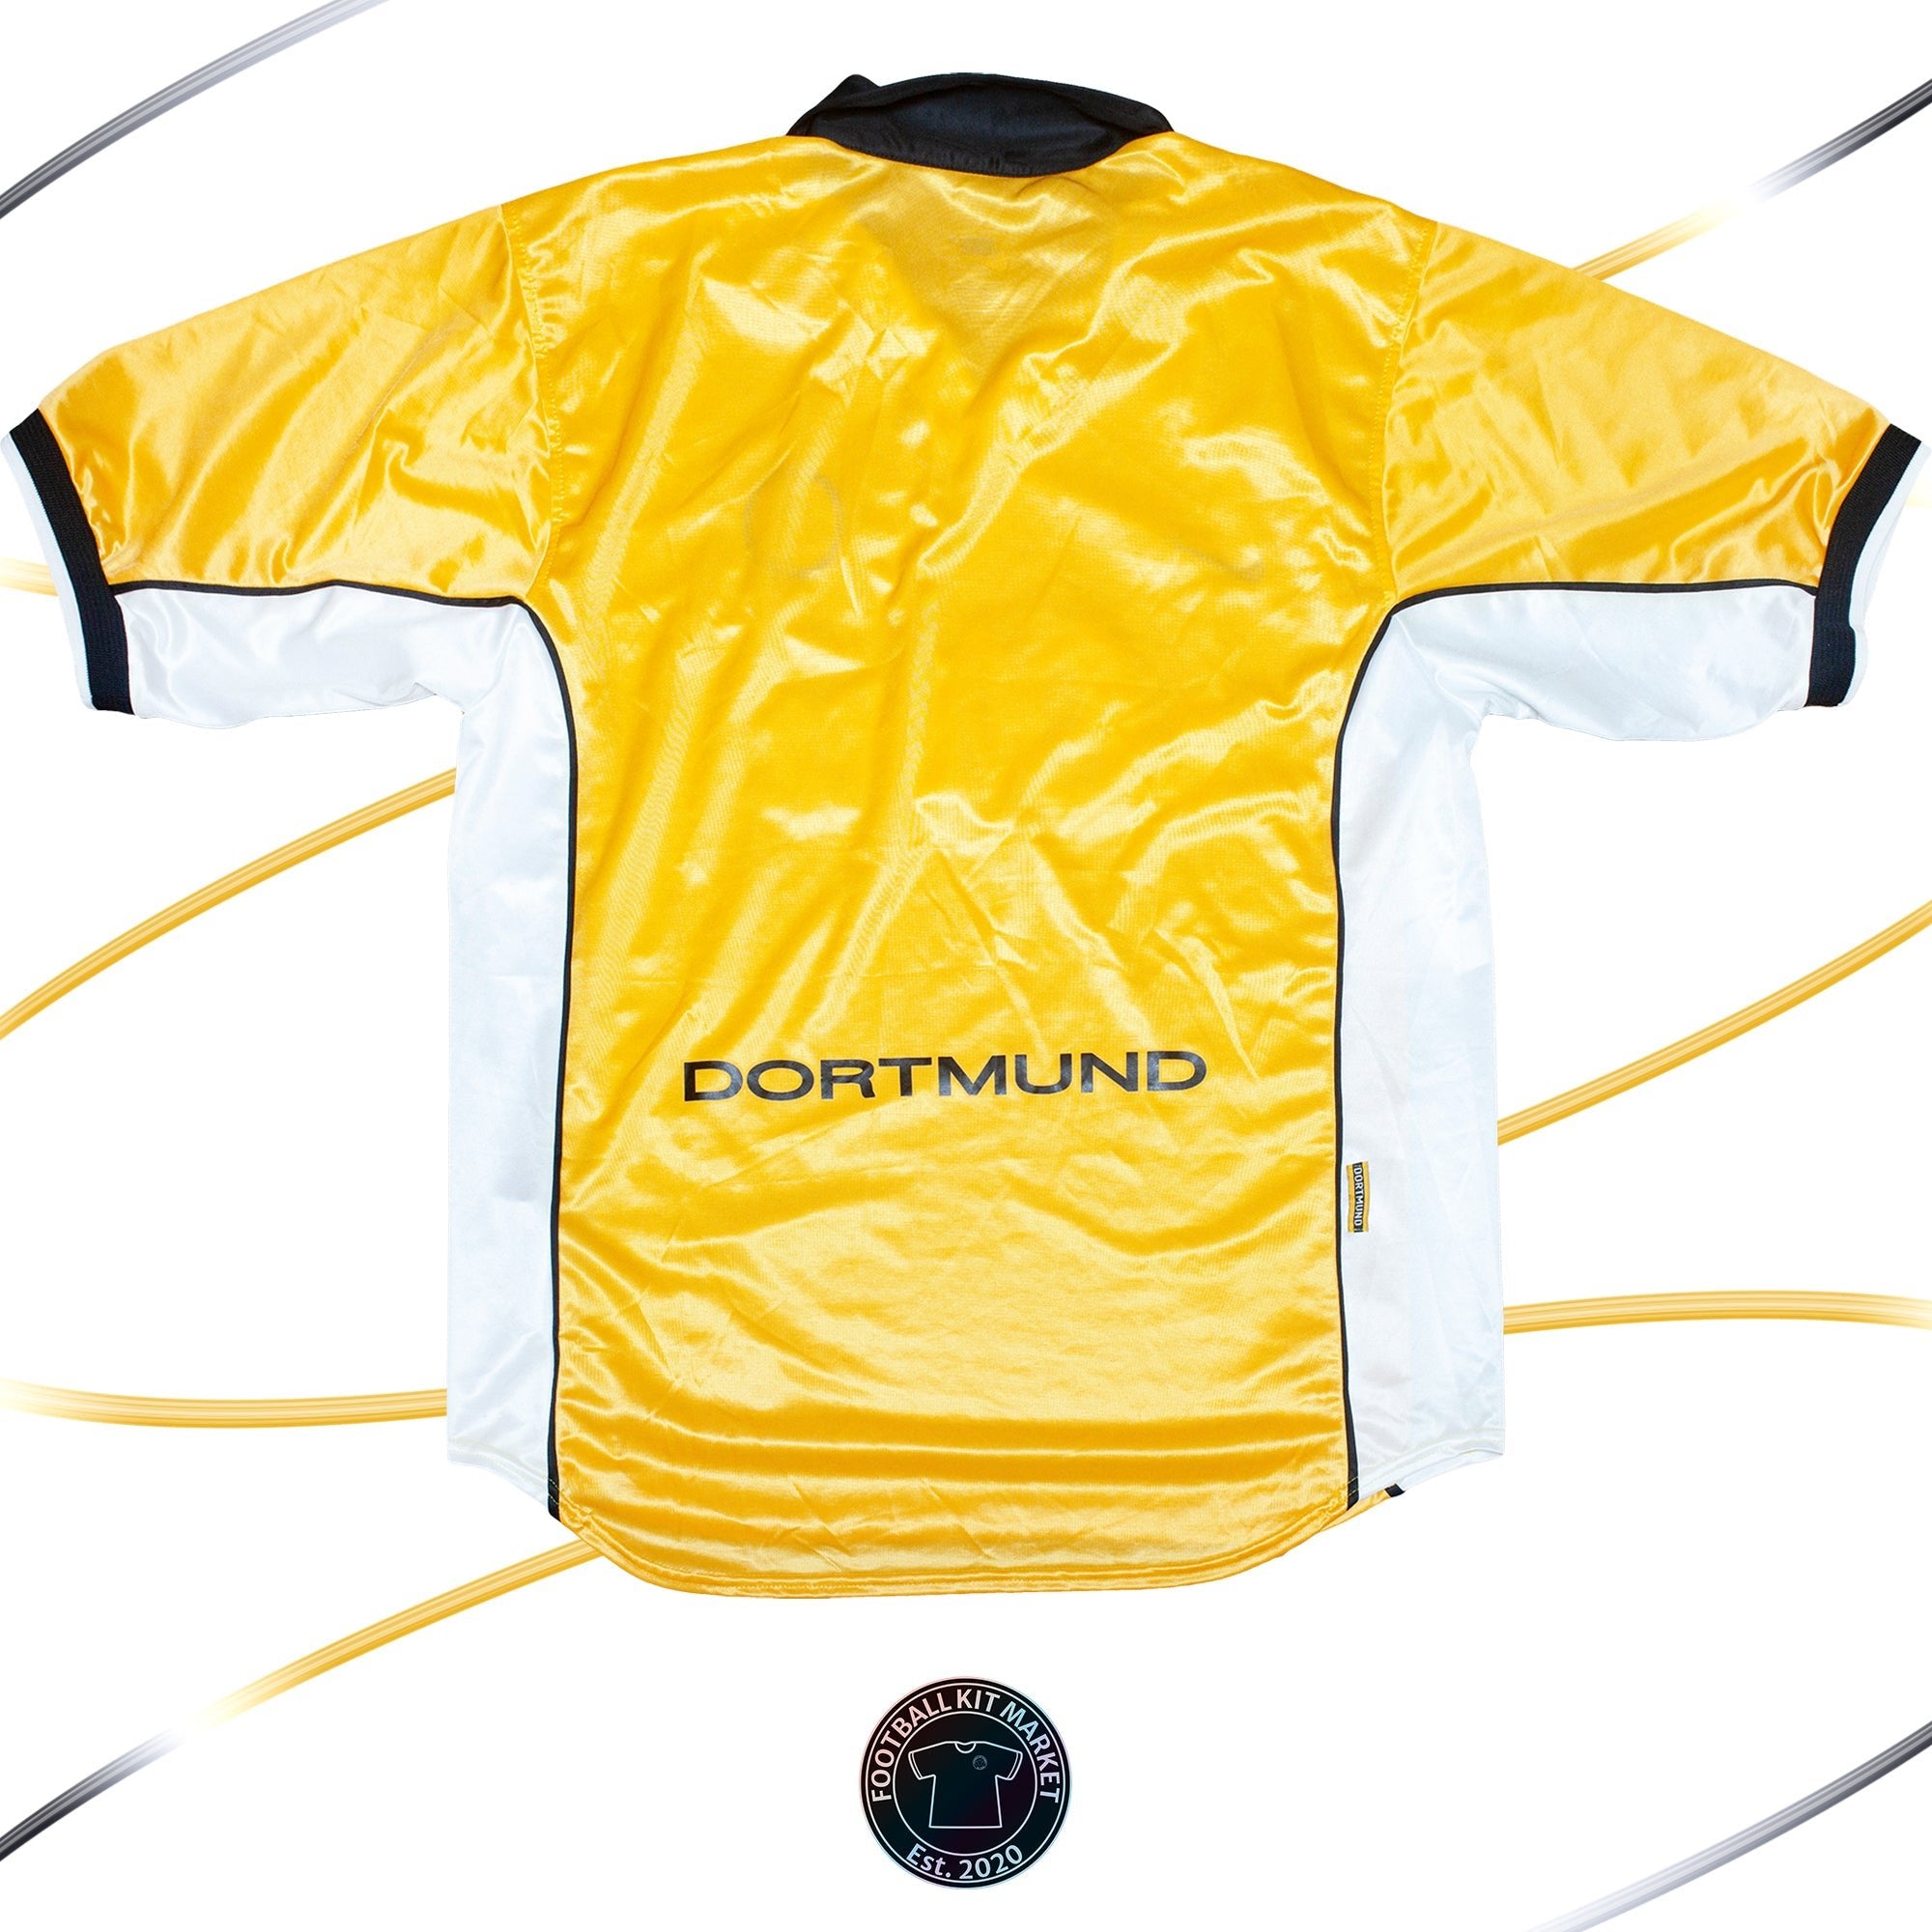 Genuine BORUSSIA DORTMUND Home Shirt (1998-2000) - NIKE (XL) - Product Image from Football Kit Market